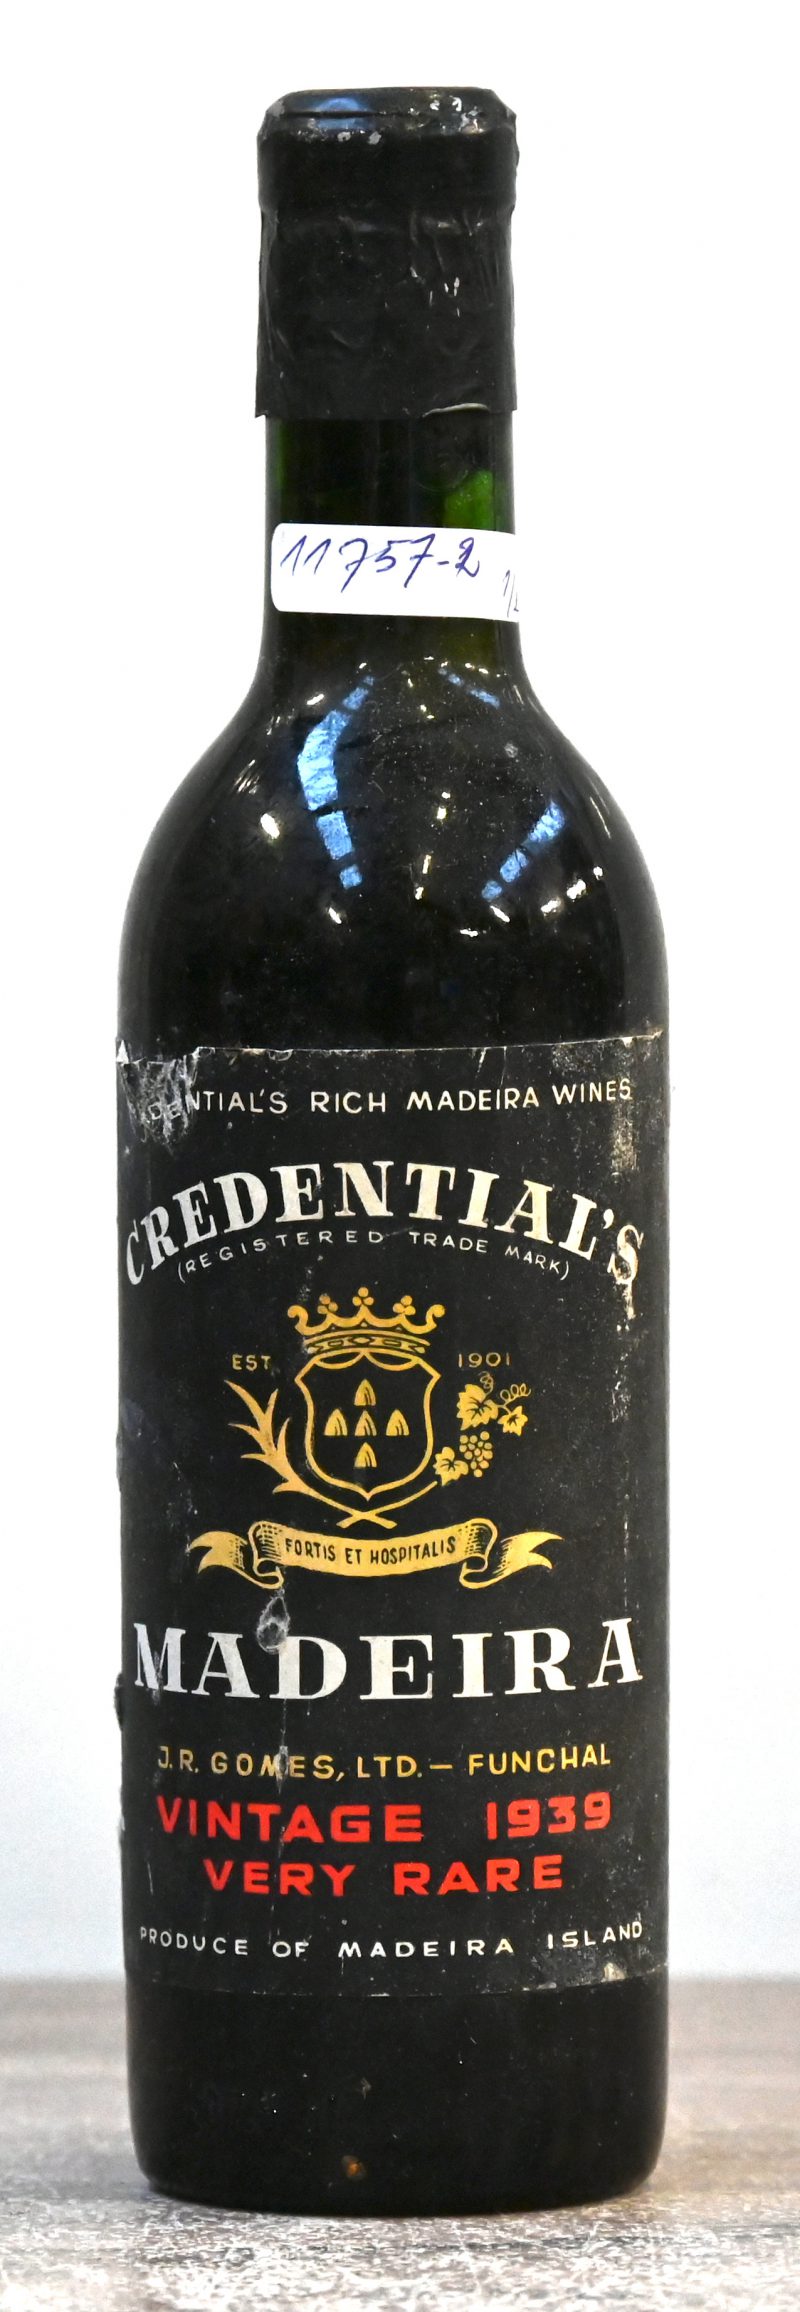 Credential’s Madeira. Gomez Ltd, Funchal Vintage M.O. 1939, 1 hbt.